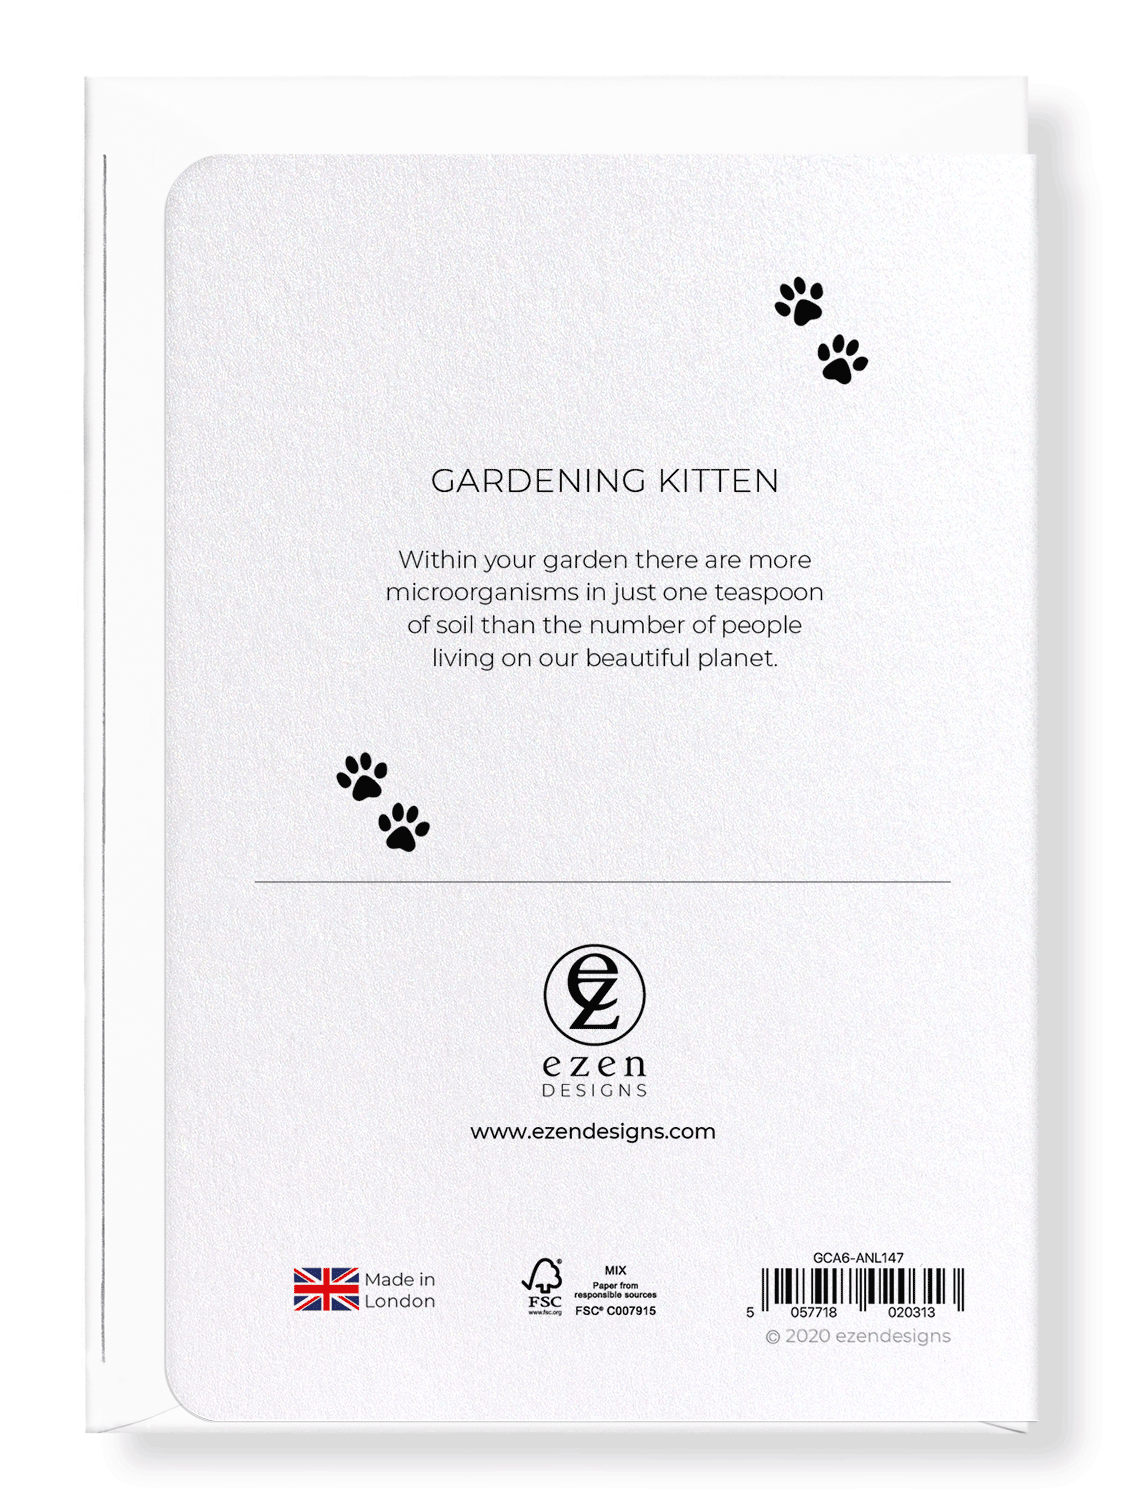 Ezen Designs - Gardening kitten - Greeting Card - Back